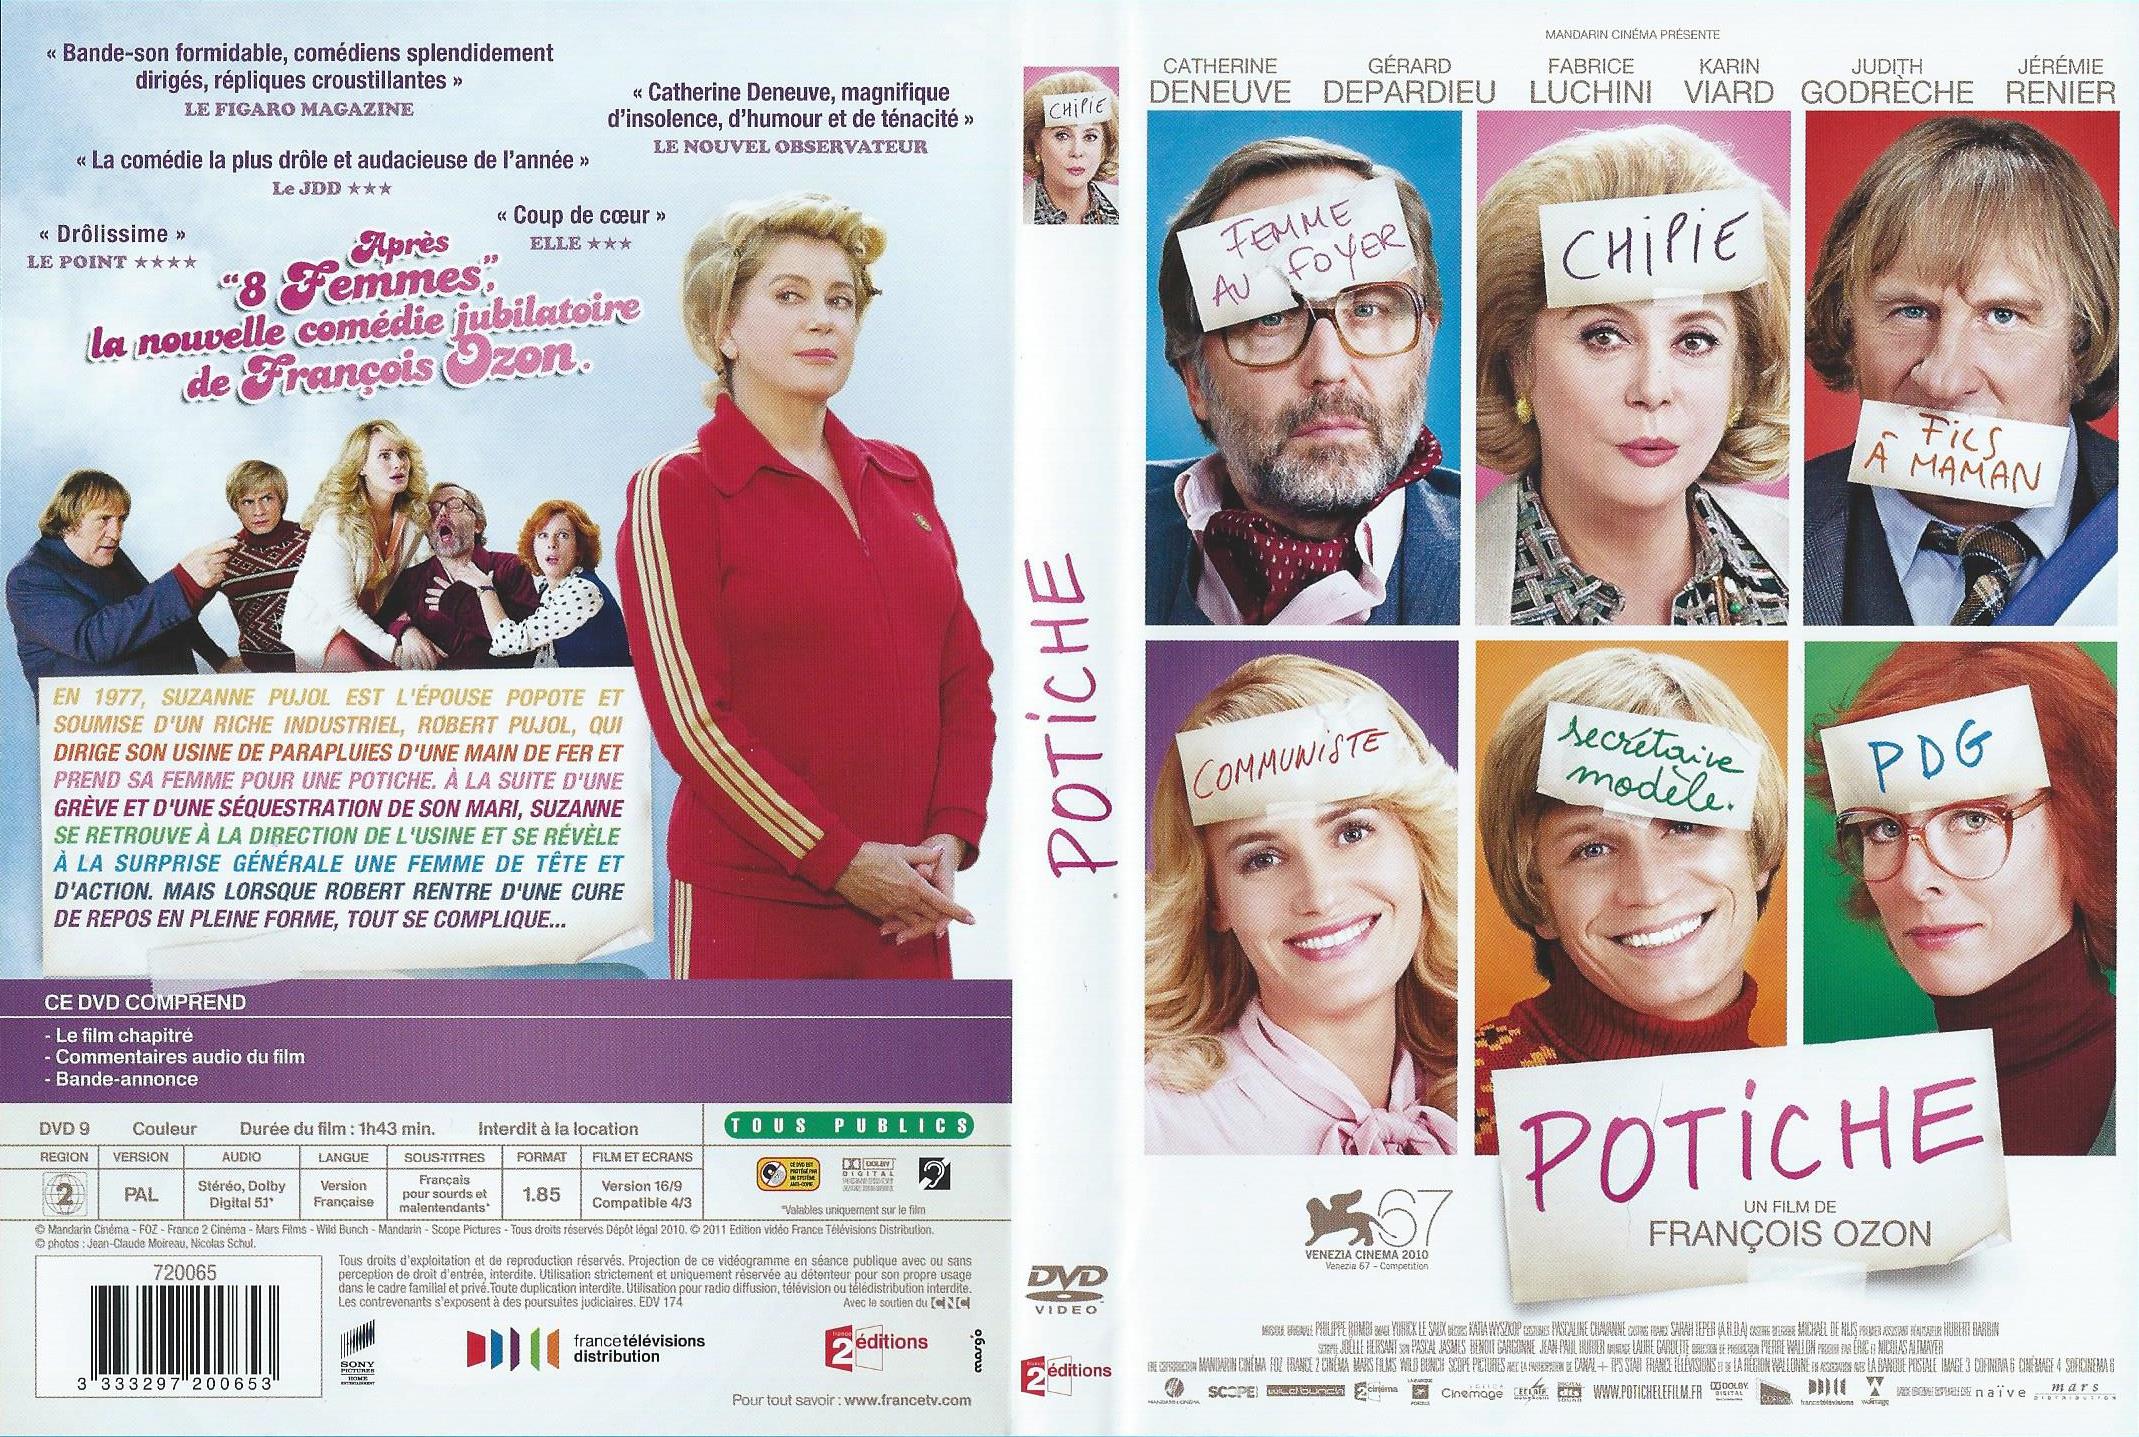 Jaquette DVD Potiche v2